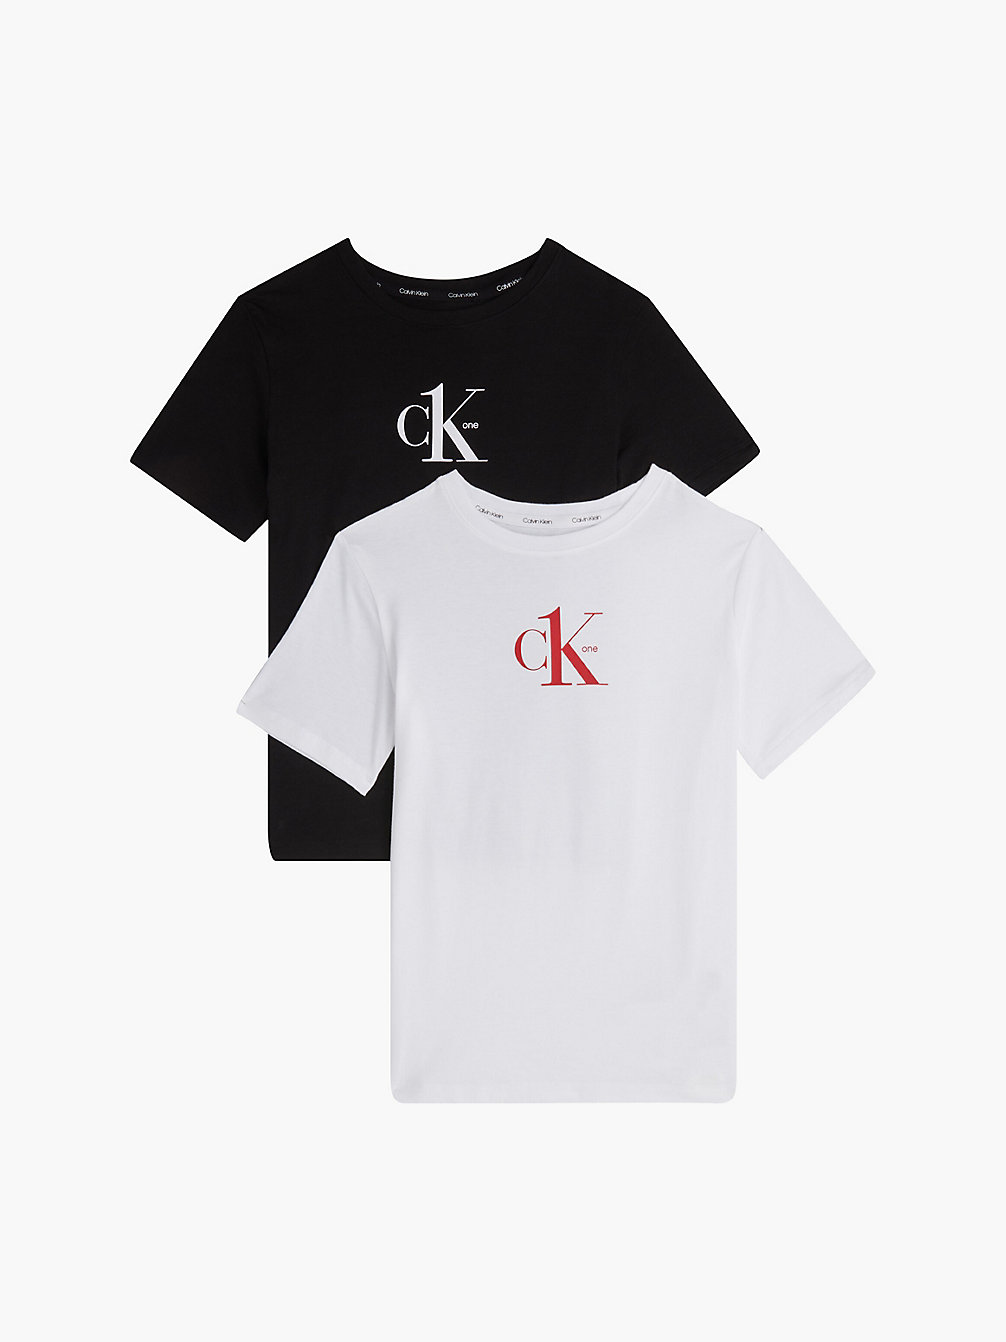 PVHBLACK/PVHWHITE 2 Pack Unisex T-Shirts - CK One undefined kids unisex Calvin Klein